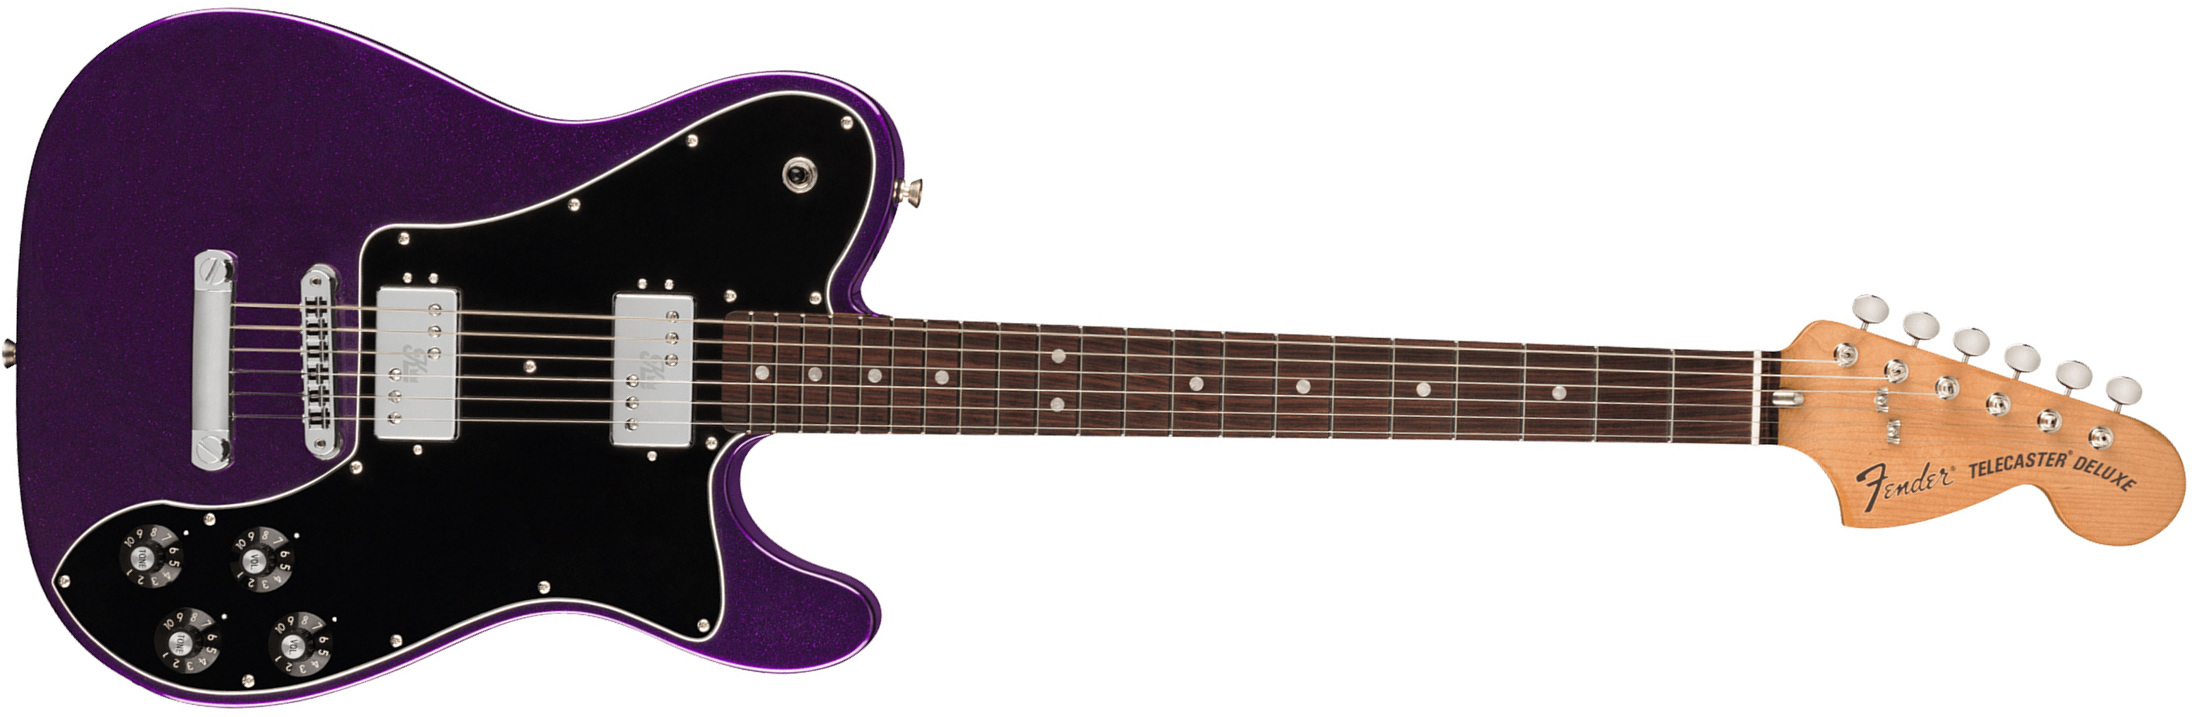 Fender Kingfish Tele Deluxe Usa Signature Hh Ht Rw - Mississippi Night - Televorm elektrische gitaar - Main picture